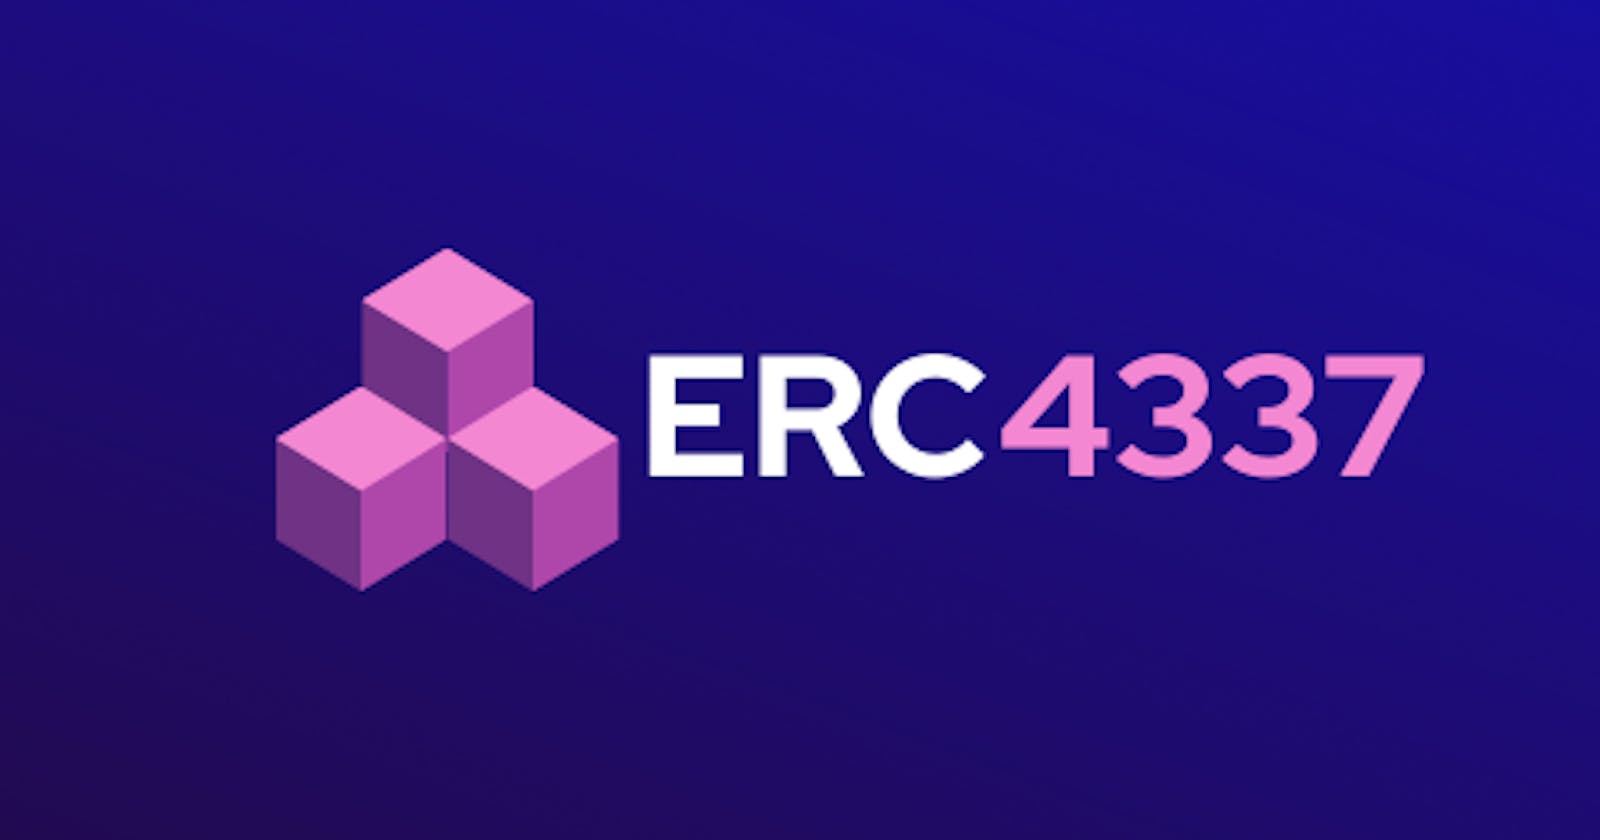 ERC 4337: A Catalyst for the Mass Adoption of Blockchain Technology